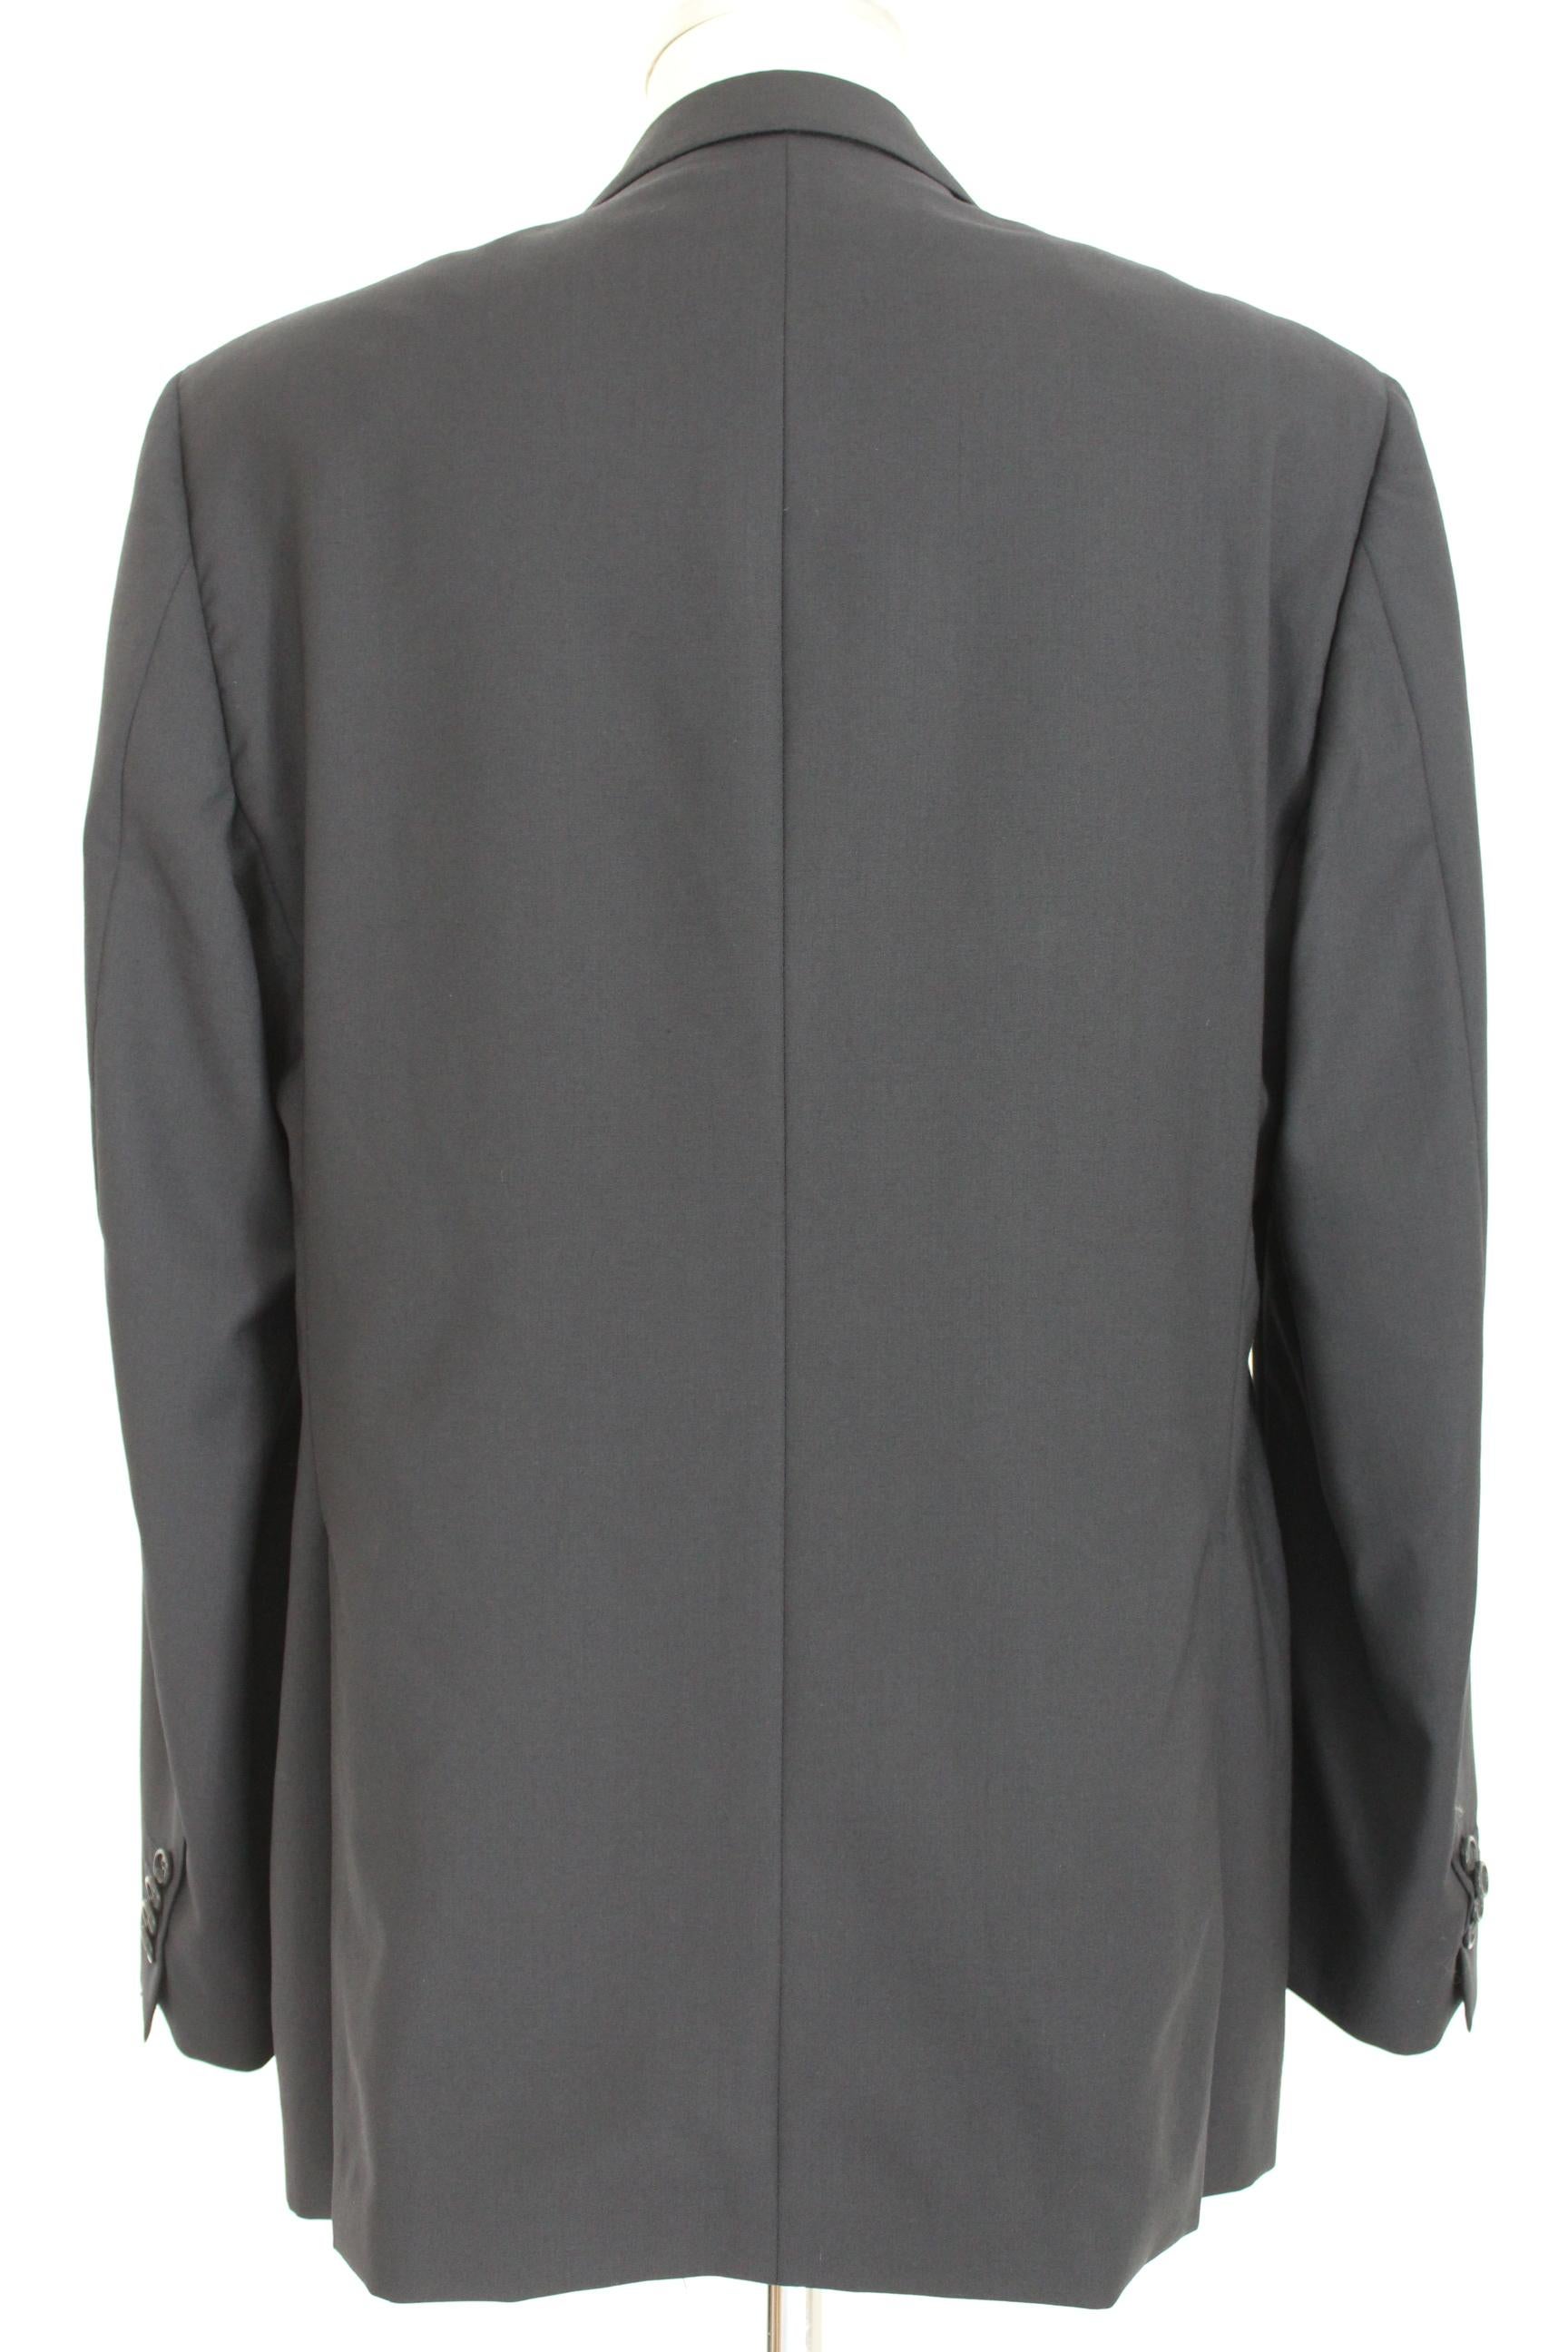 Gianfranco Ferre Studio 90s vintage elegant men's jacket. Classic oversize model, dark blue color. 100% virgin wool. Made in Italy. Excellent vintage conditions.

Size: 54 It 44 Us 44 Uk

Shoulder: 54 cm

Bust / Chest: 58 cm

Sleeve: 63 cm

Length: